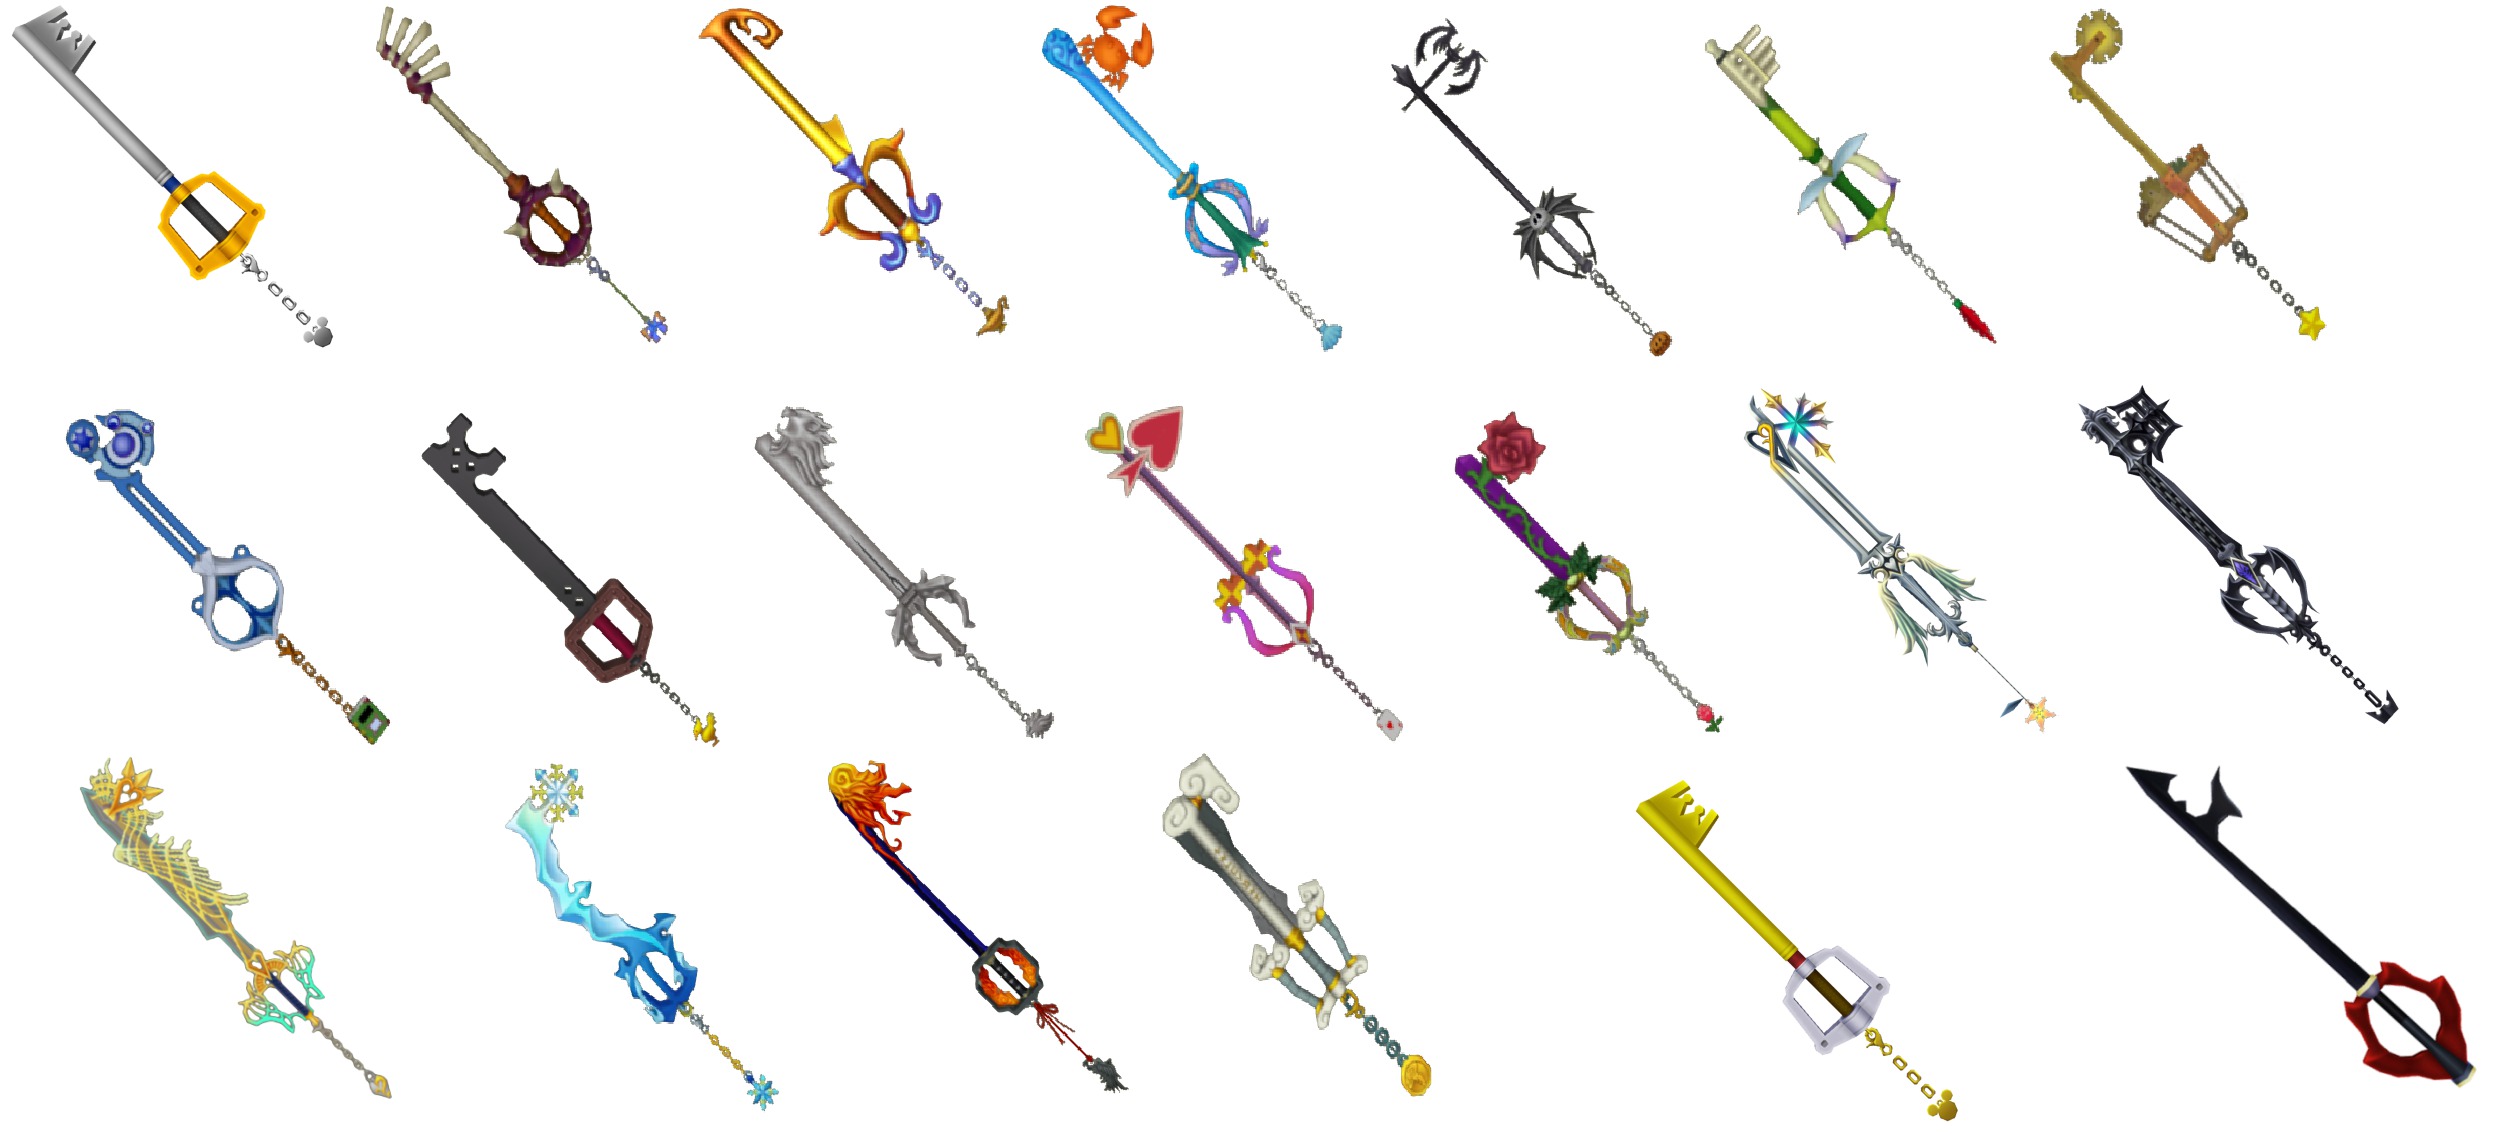 Kingdom Hearts Keyblade Wallpaper